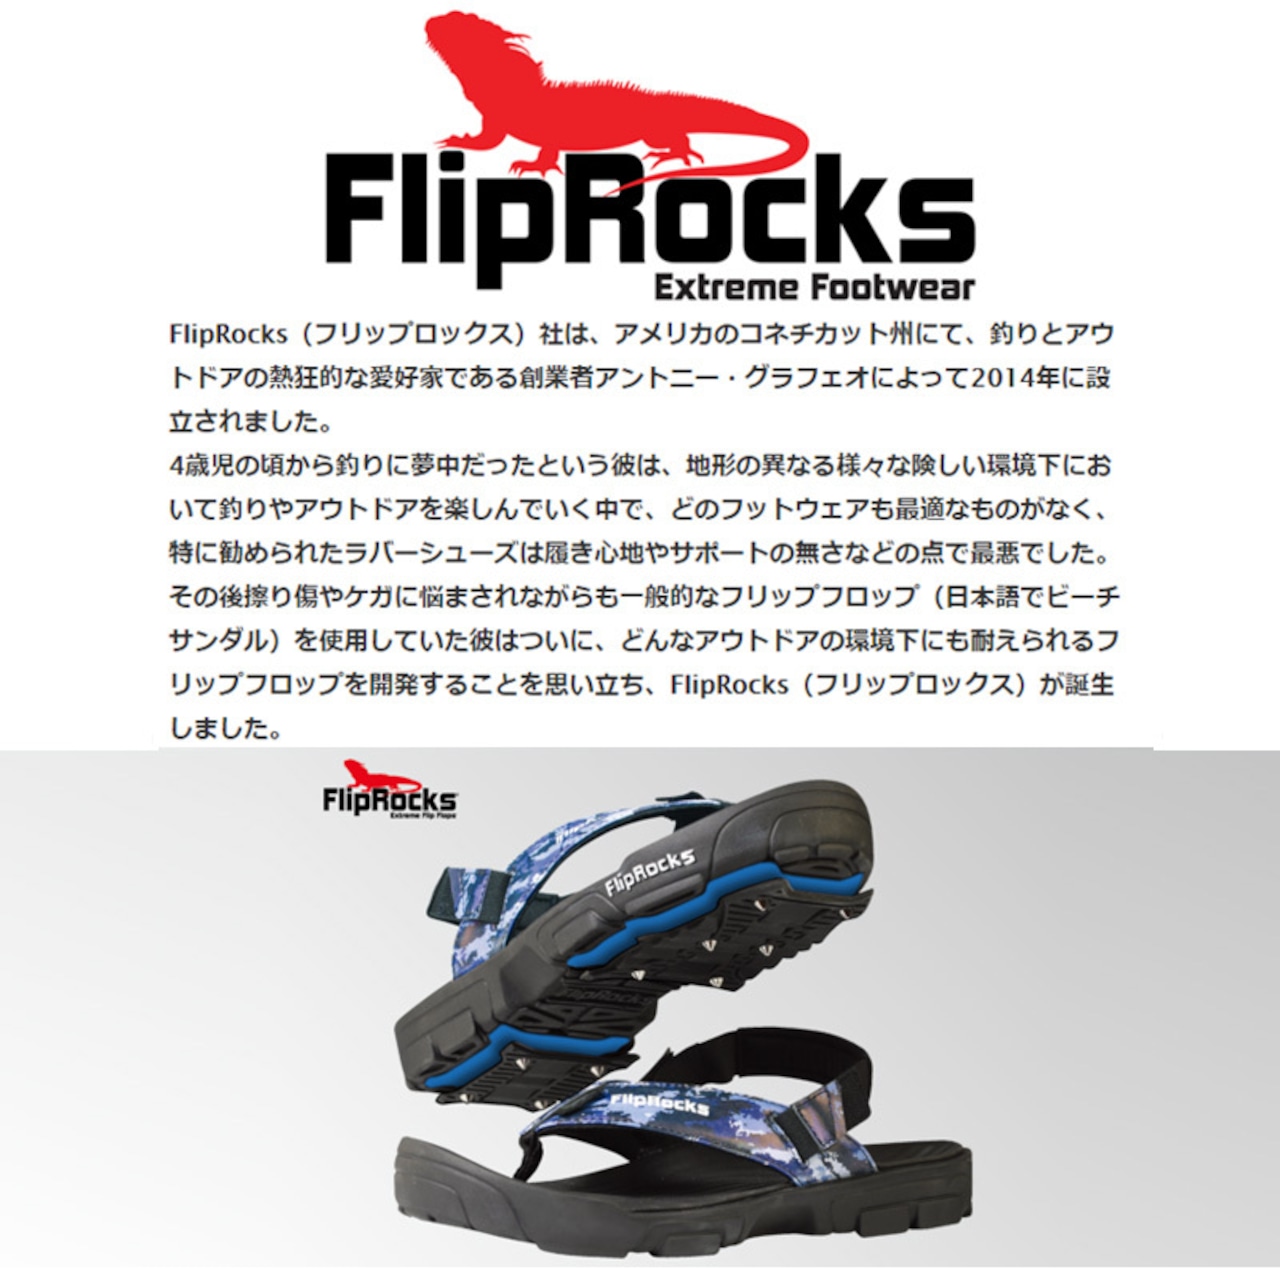 FlipRocks(フリップロックス) 交換パッド収納用 メッシュポーチ